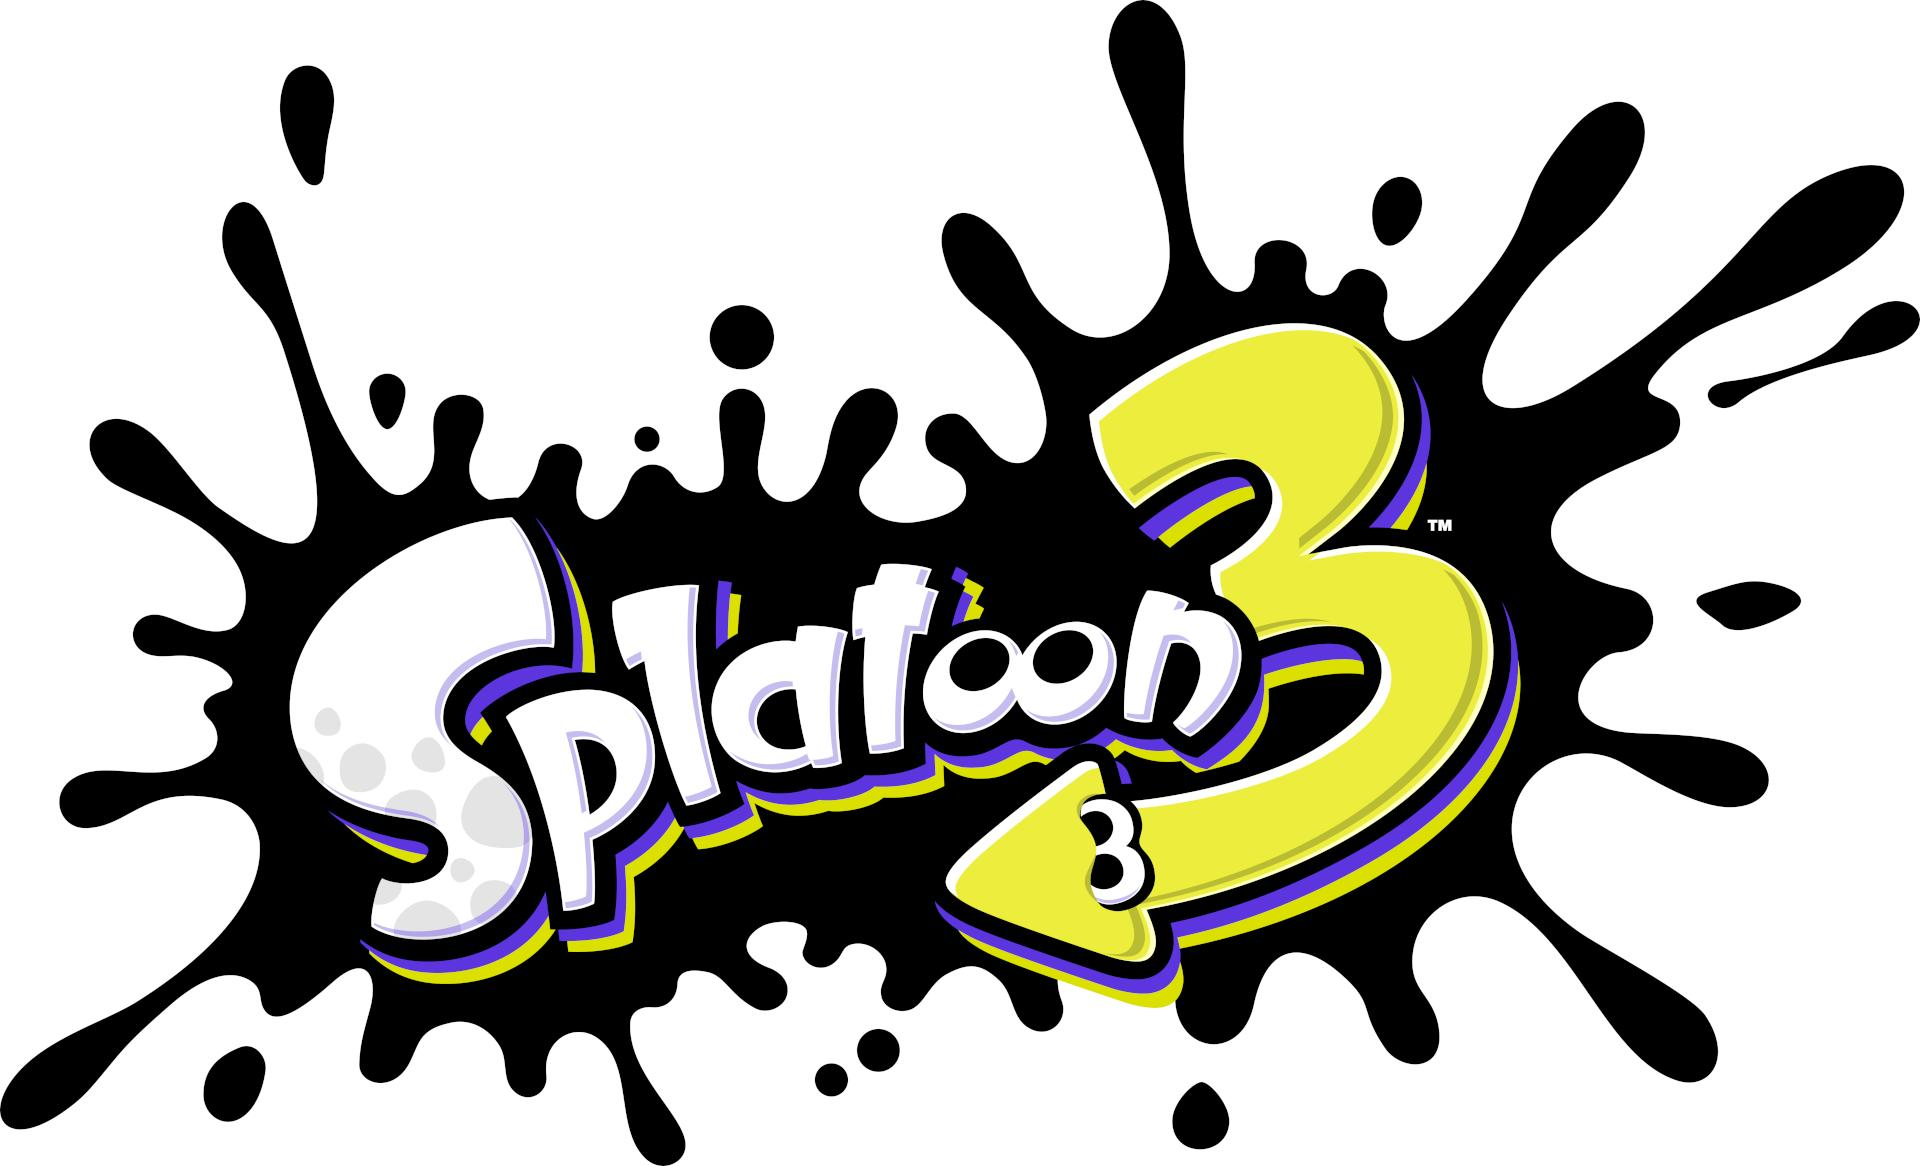 Switch] 3 [Nintendo Splatoon -